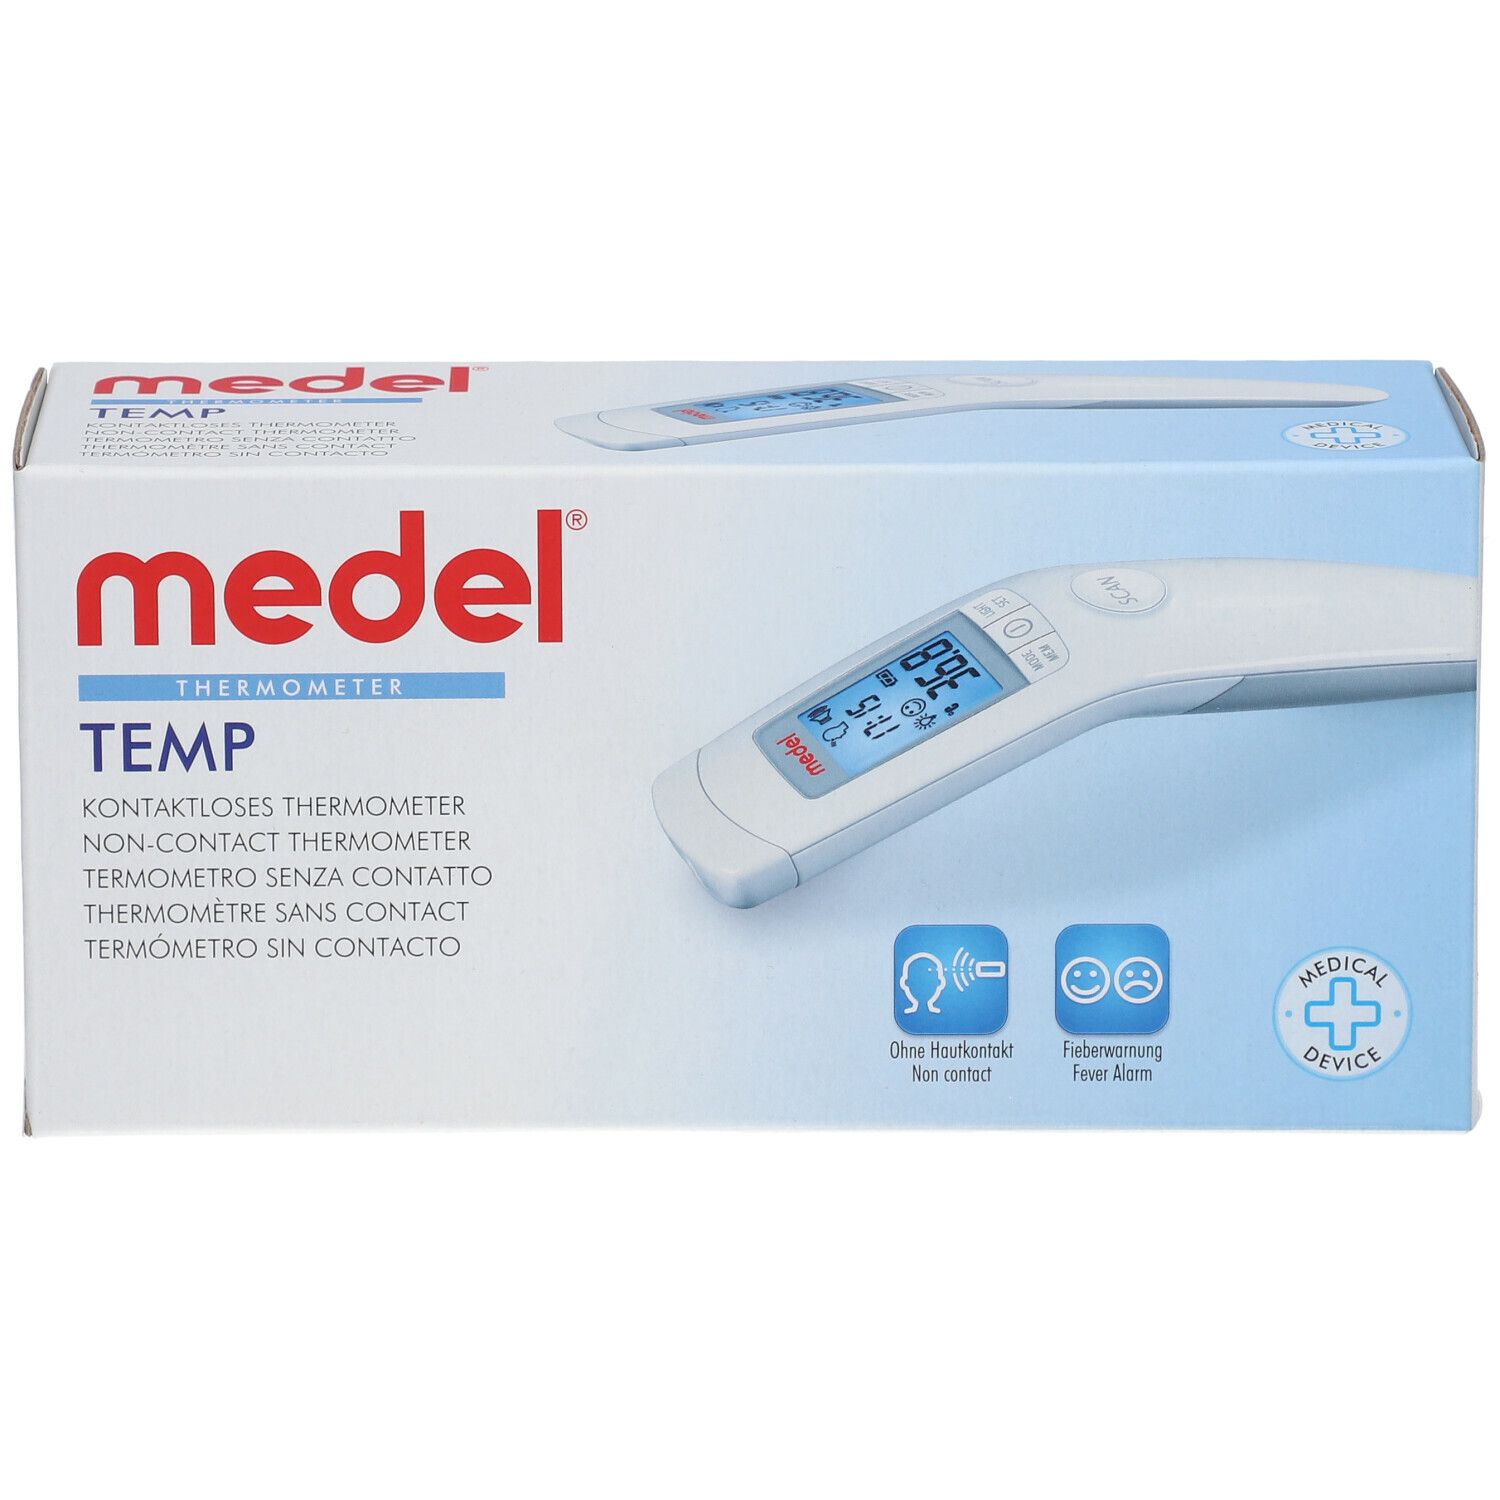 medel® Temp kontaktloses Thermometer 1 St - SHOP APOTHEKE